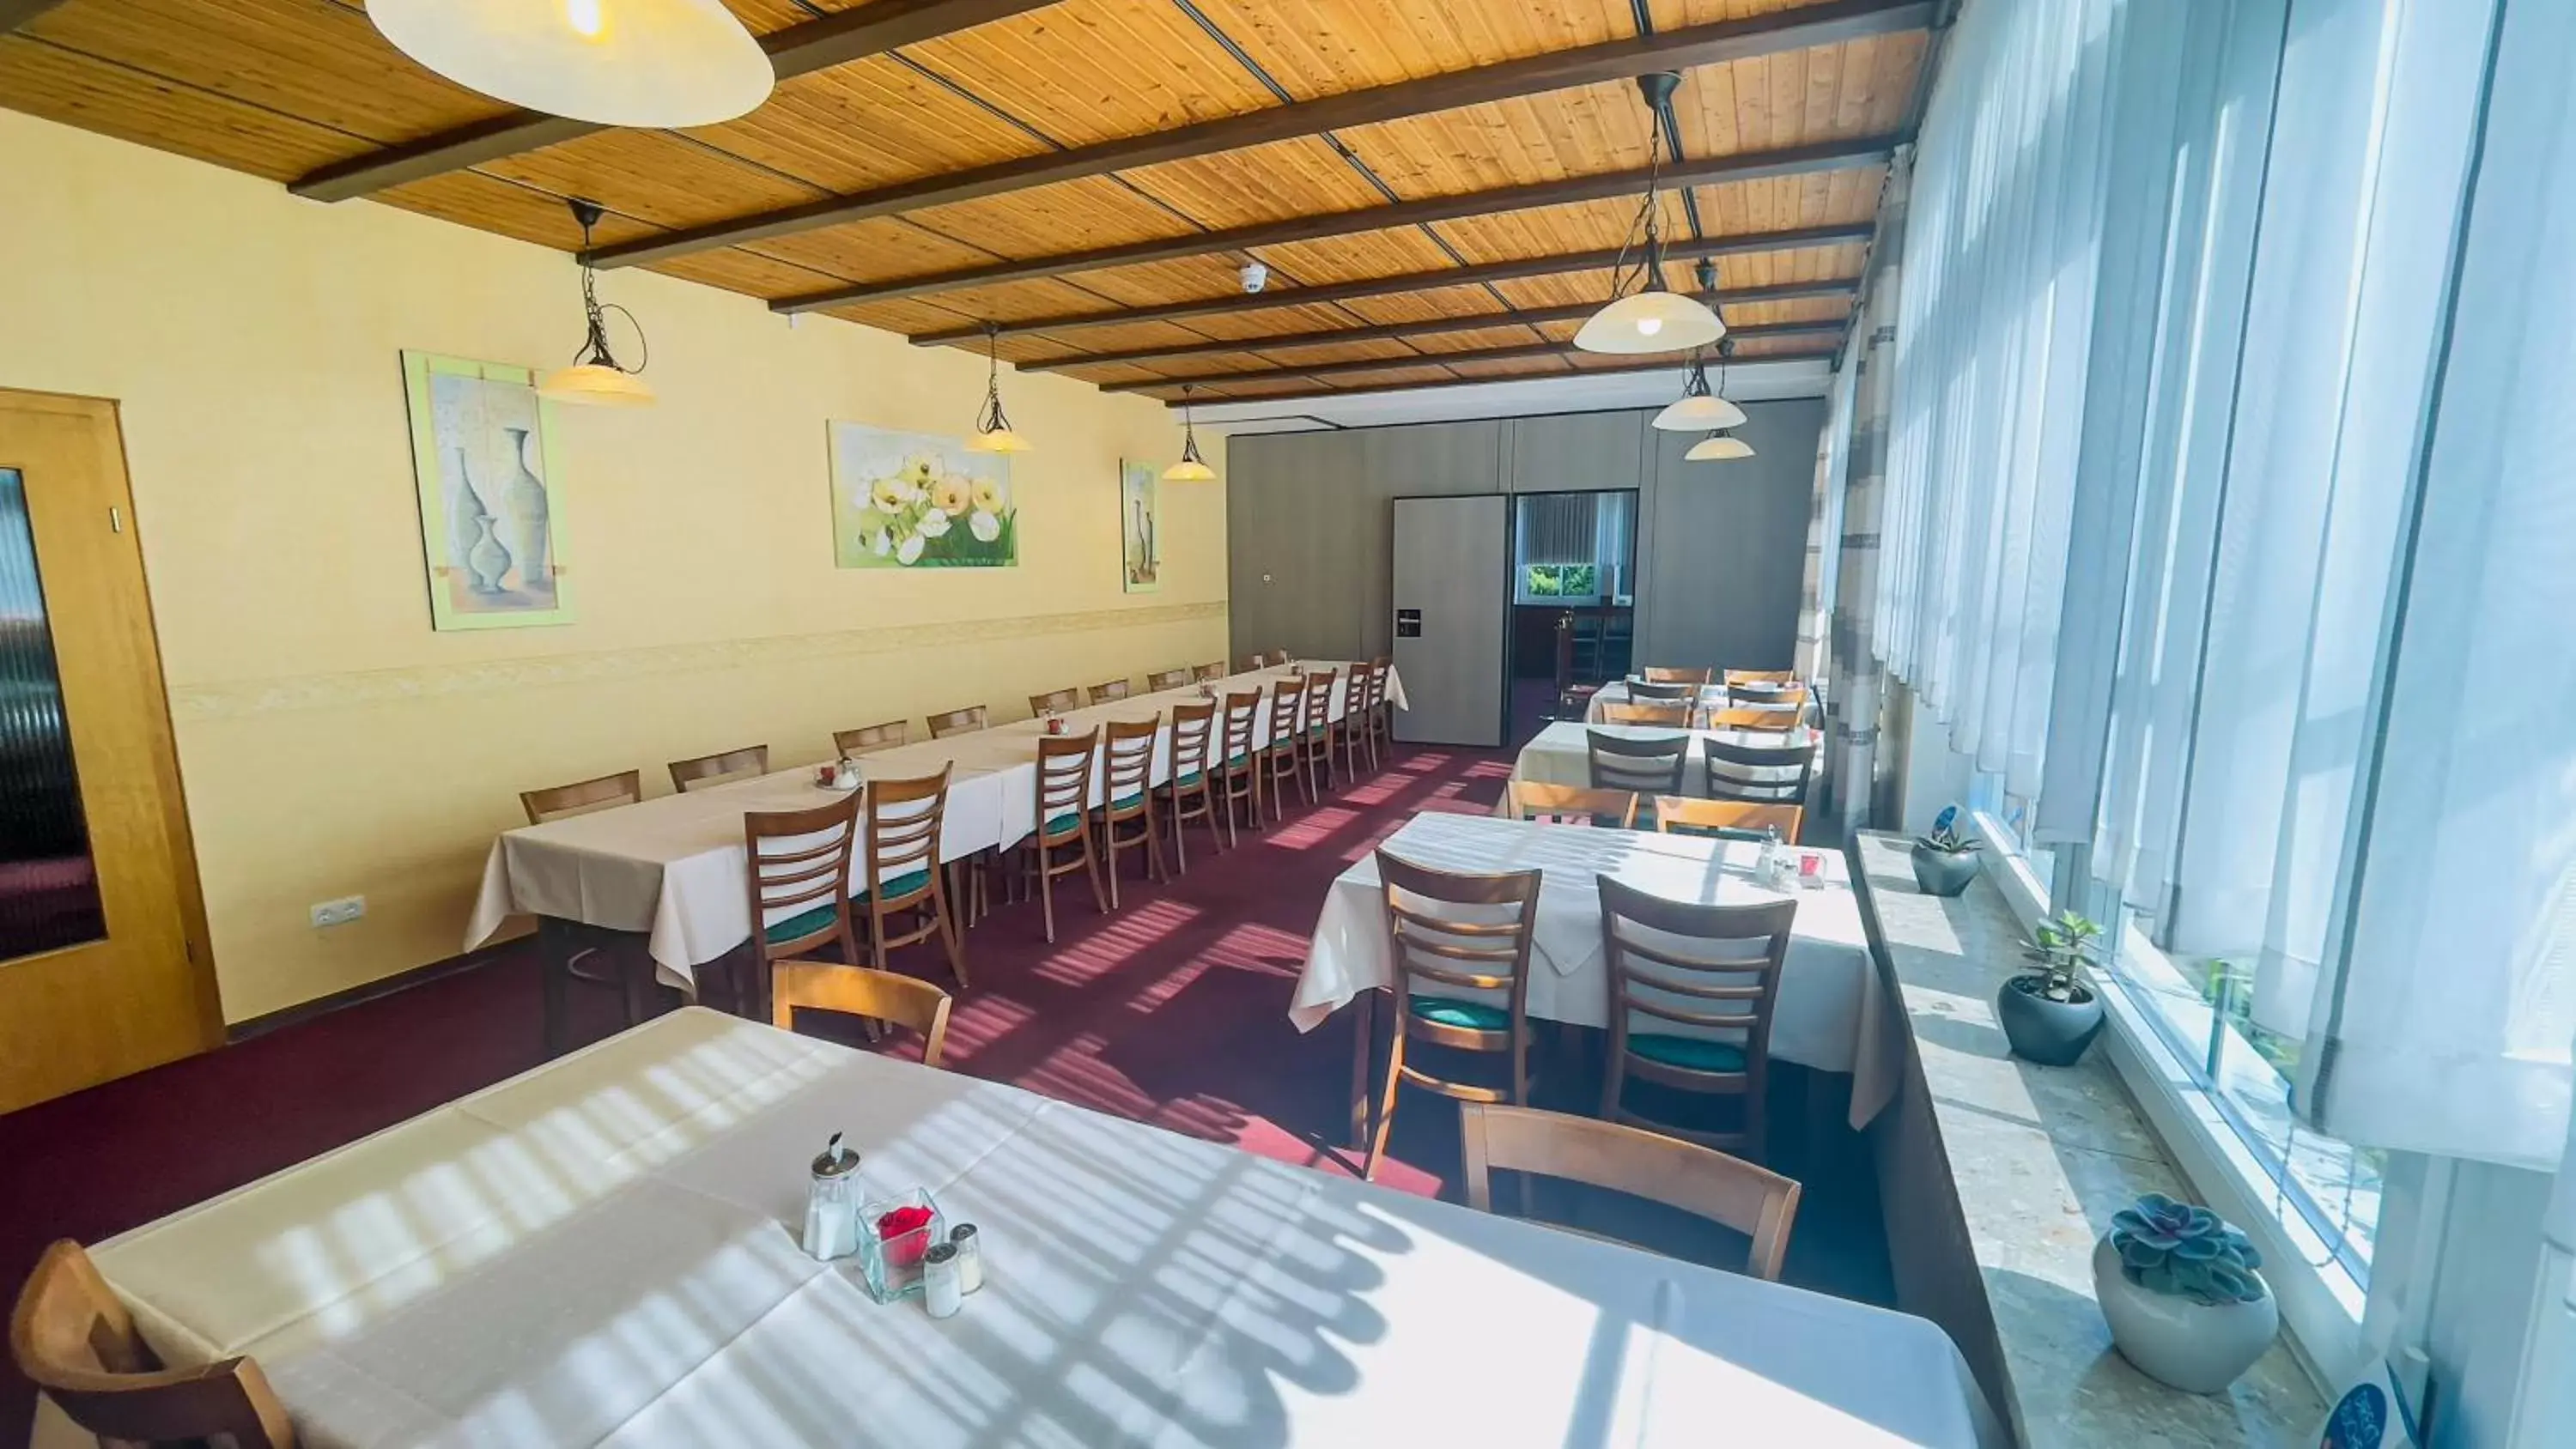 Banquet/Function facilities, Restaurant/Places to Eat in Hotel Schnehagen